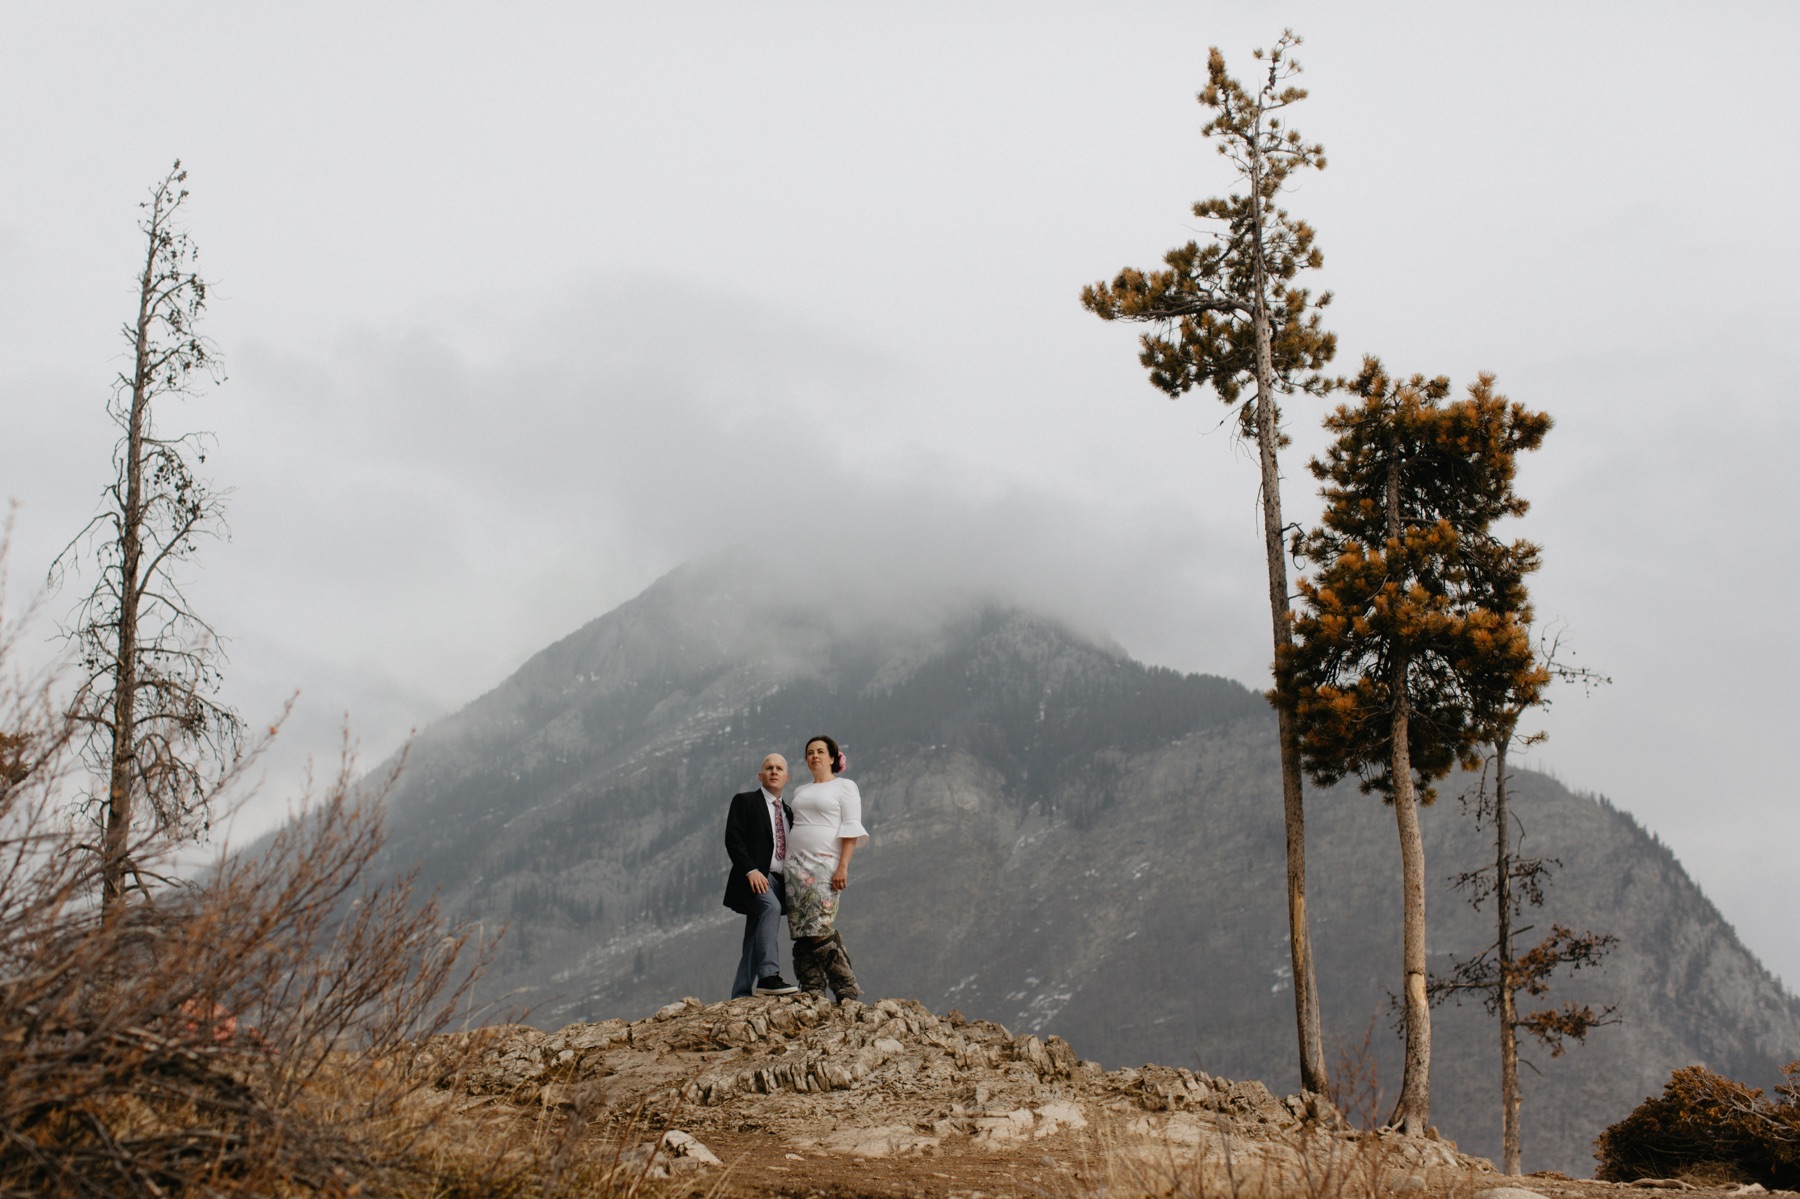 Midwinter elopement portraits at Lake Minnewanka in Banff National Park